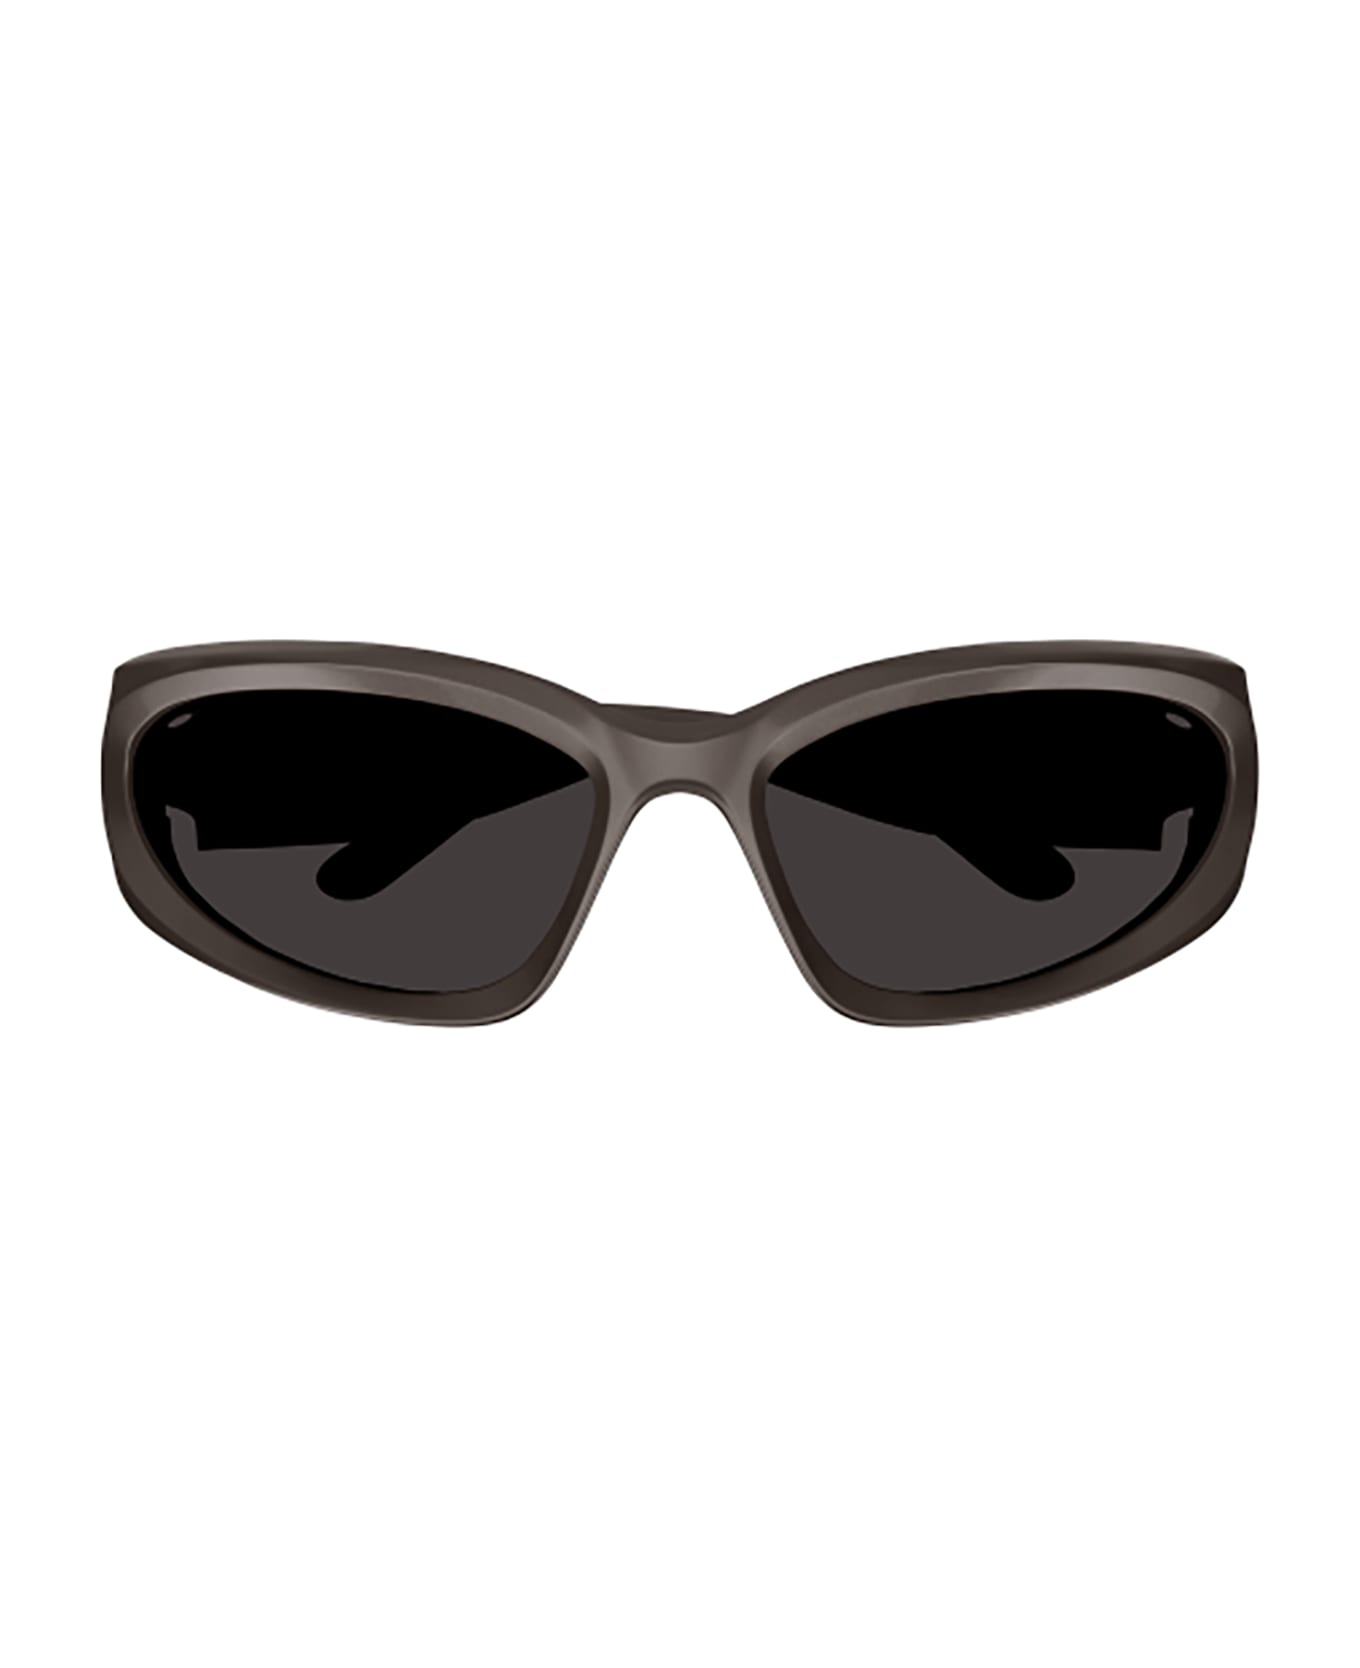 Balenciaga Eyewear Bb0157s Sunglasses - 008 grey grey grey